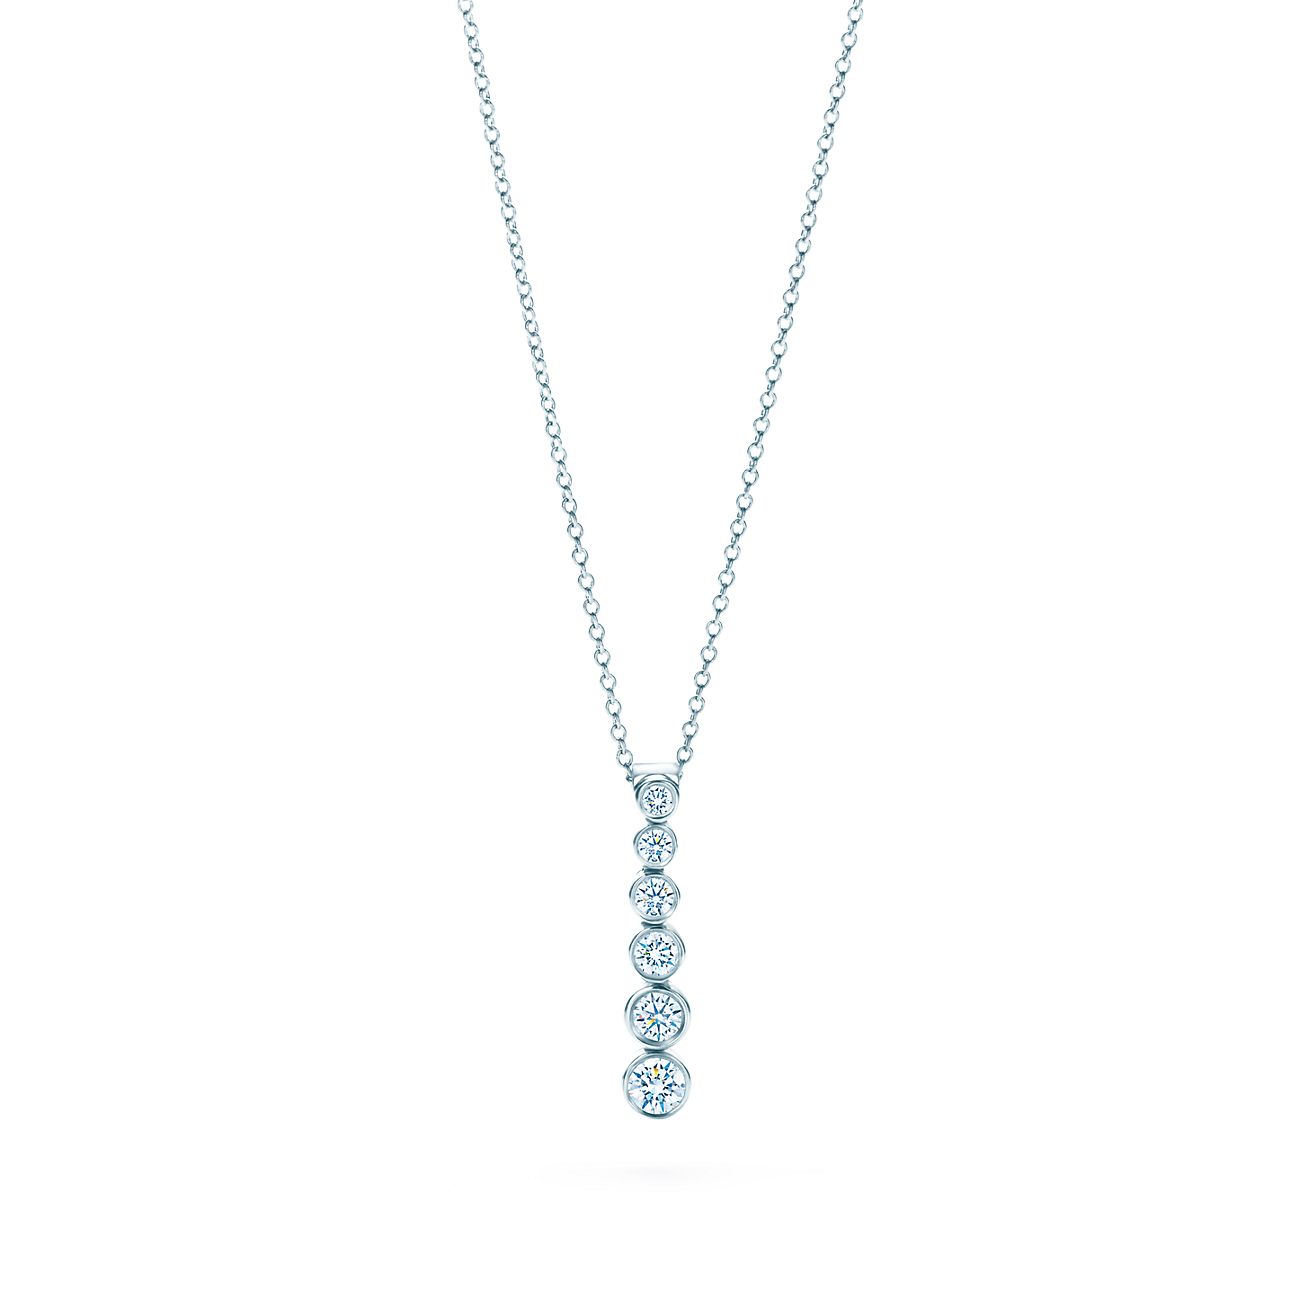 Tiffany Jazz® graduated drop pendant 